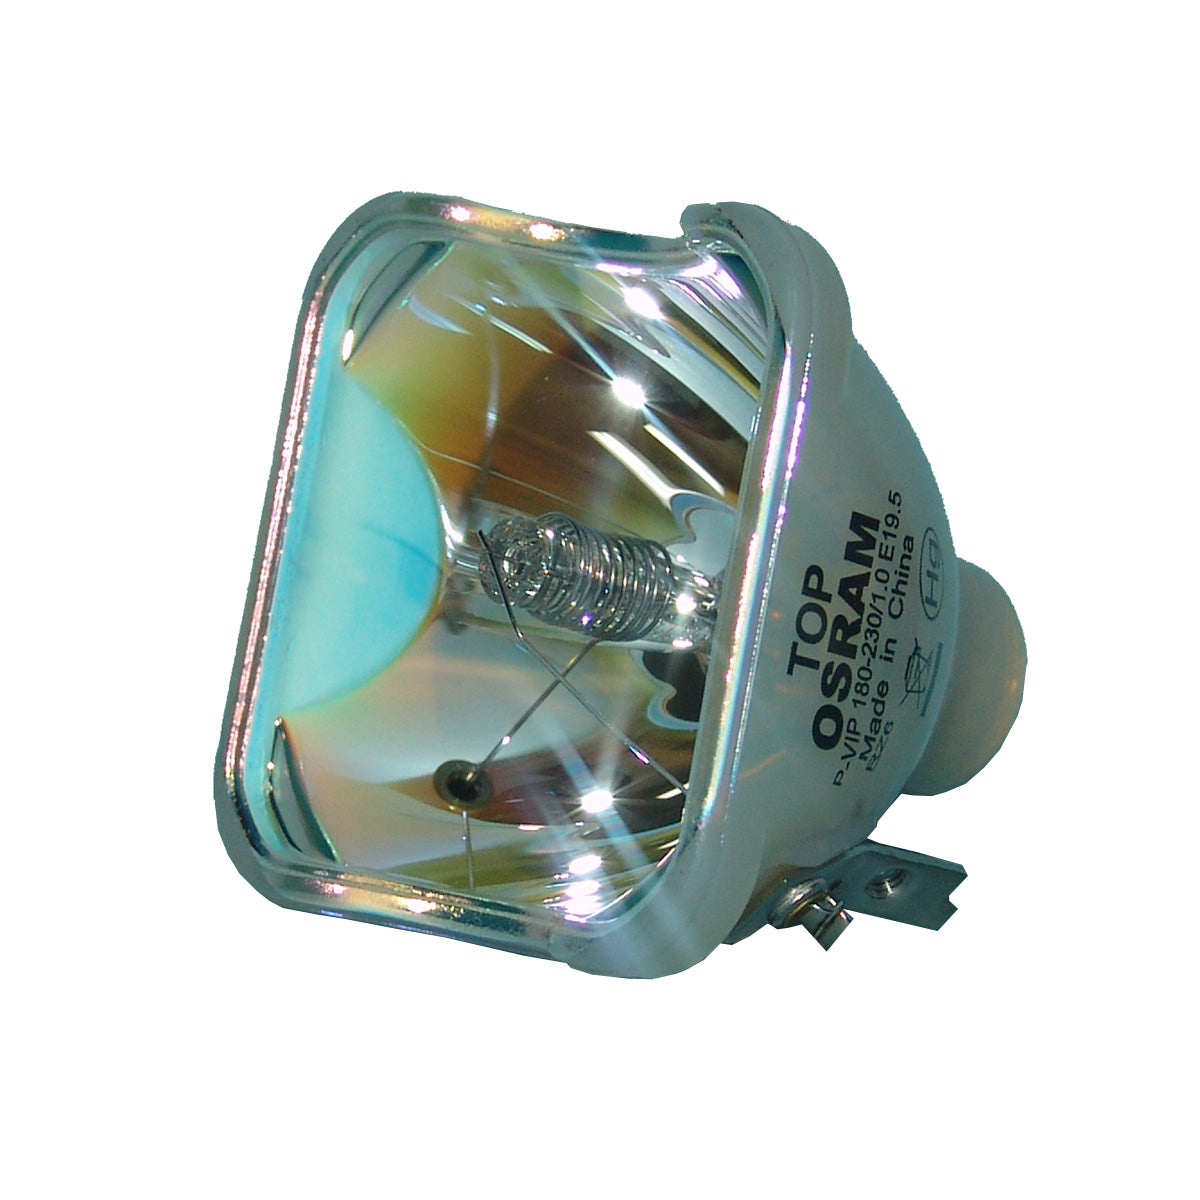 3M 78-6972-0008-3 Osram Projector Bare Lamp